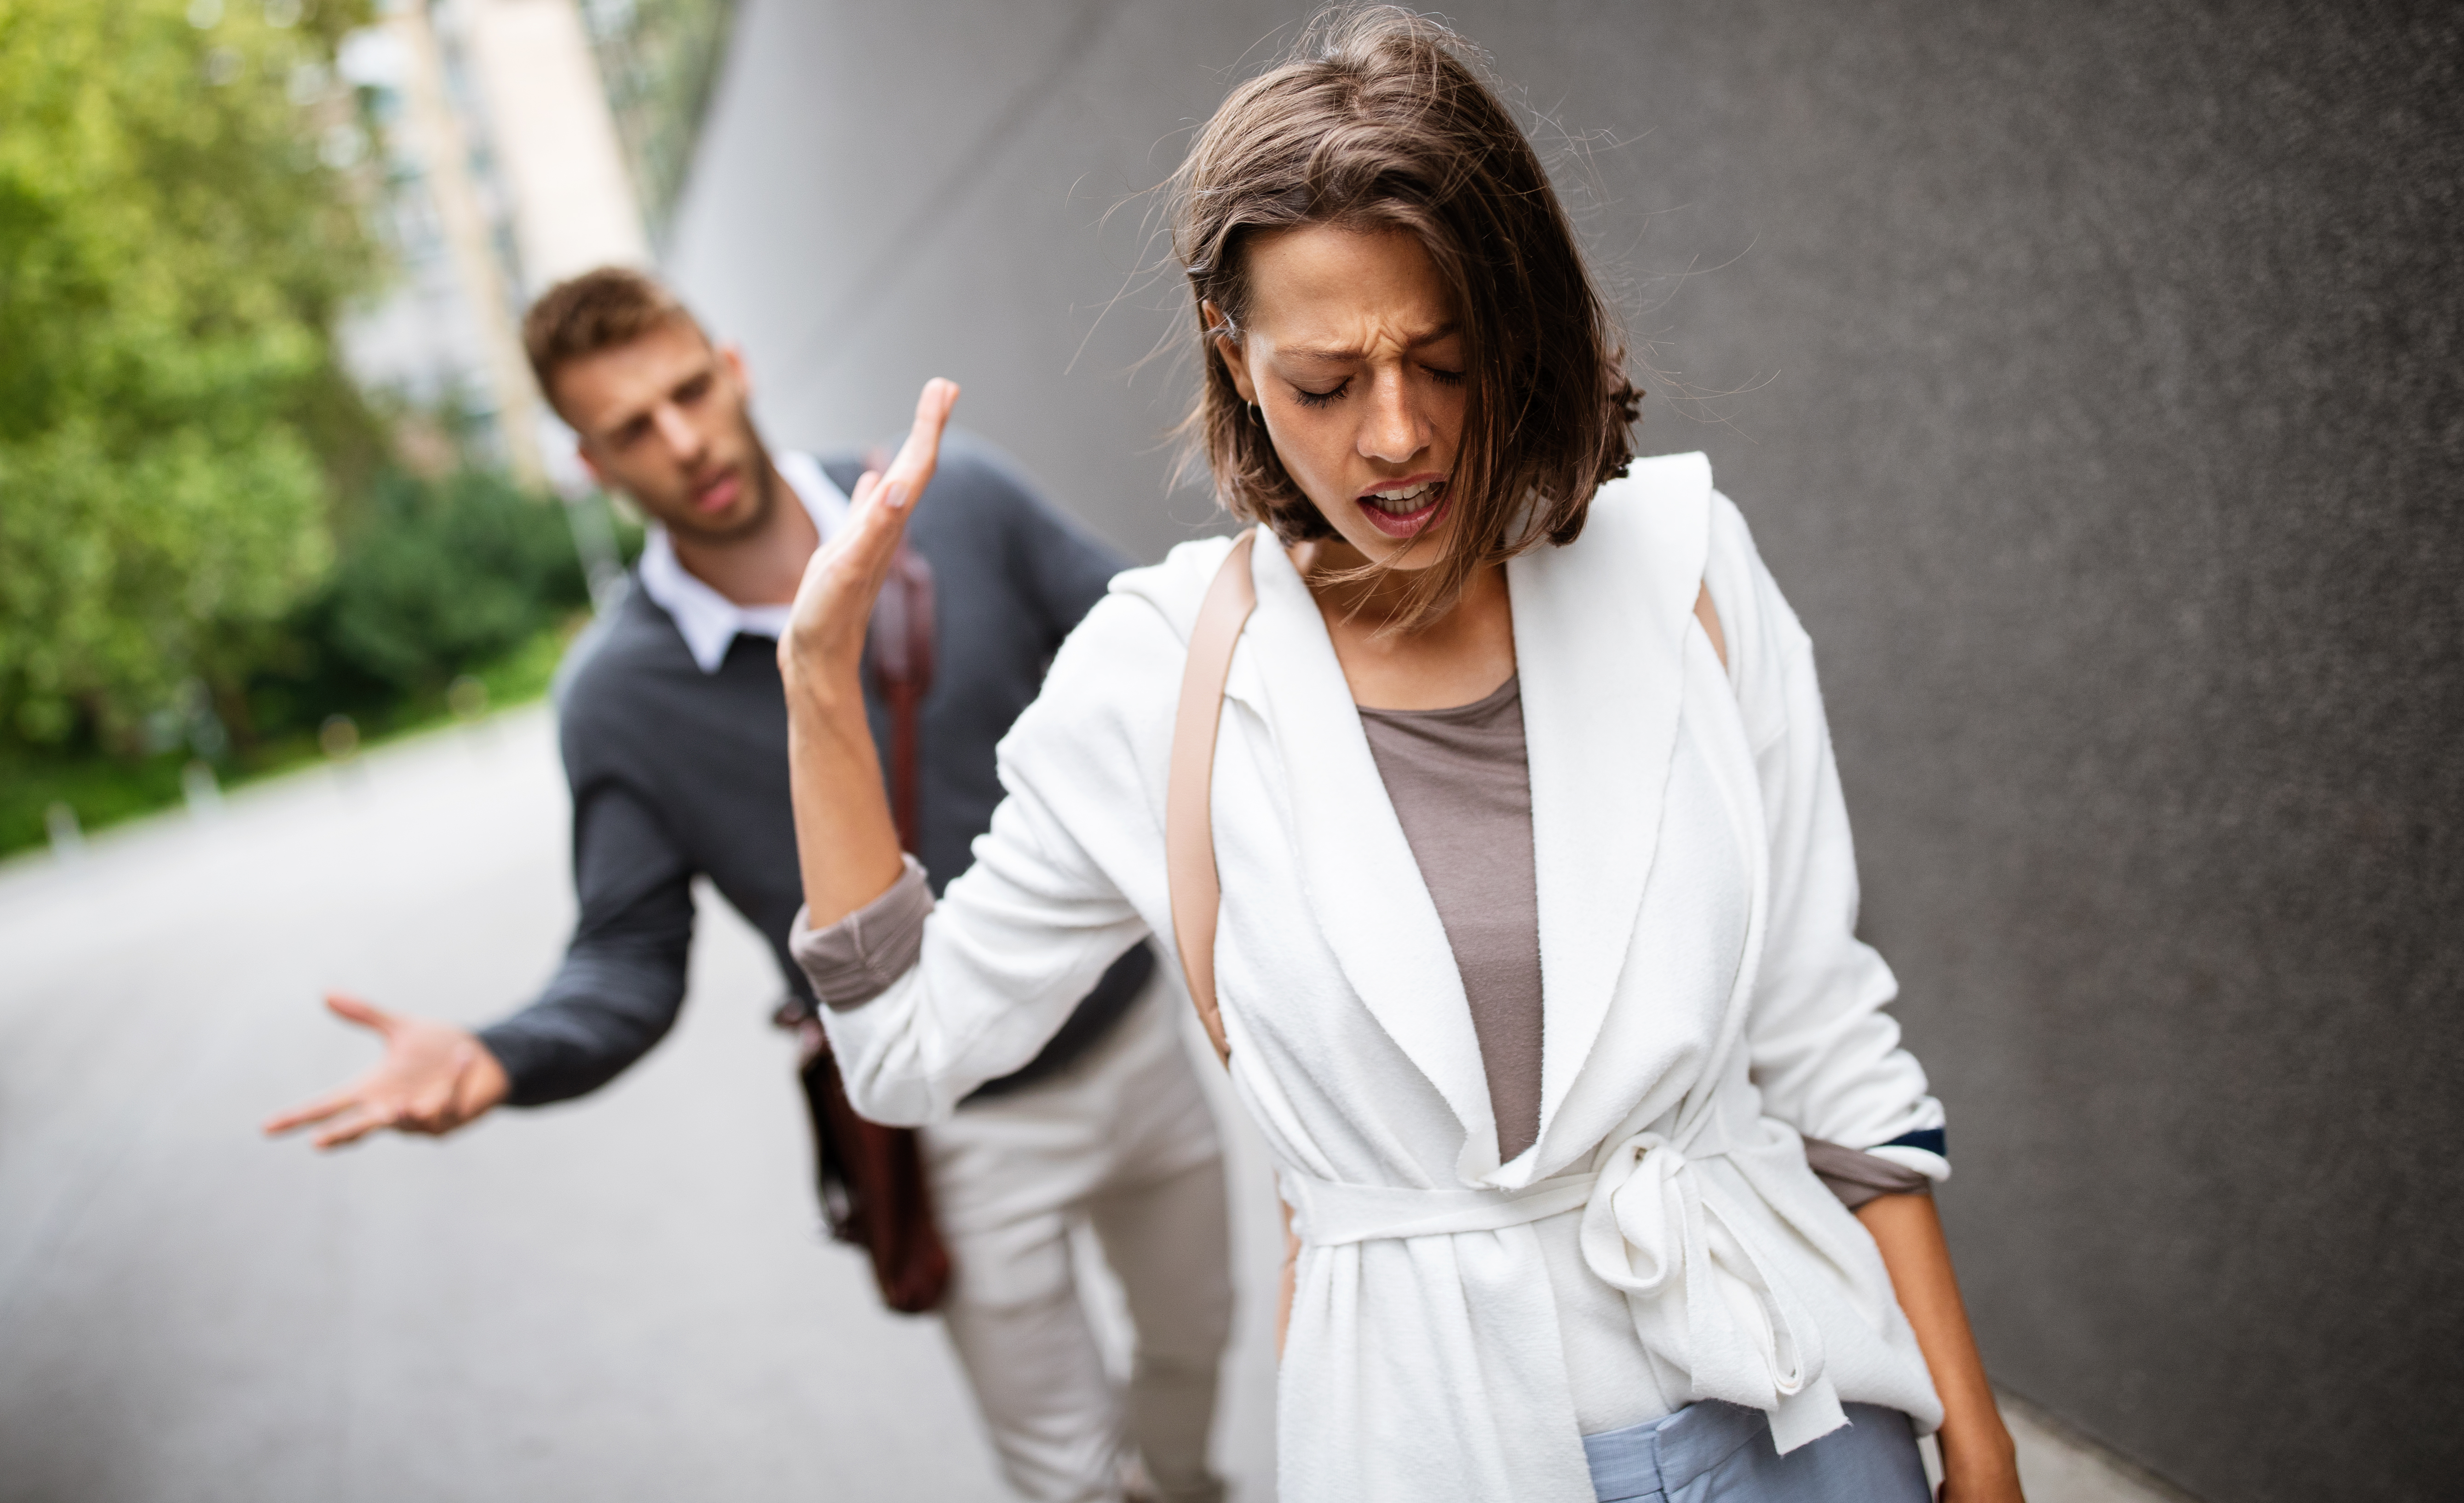 A woman leaving her husband after an argument | Source: Shutterstock